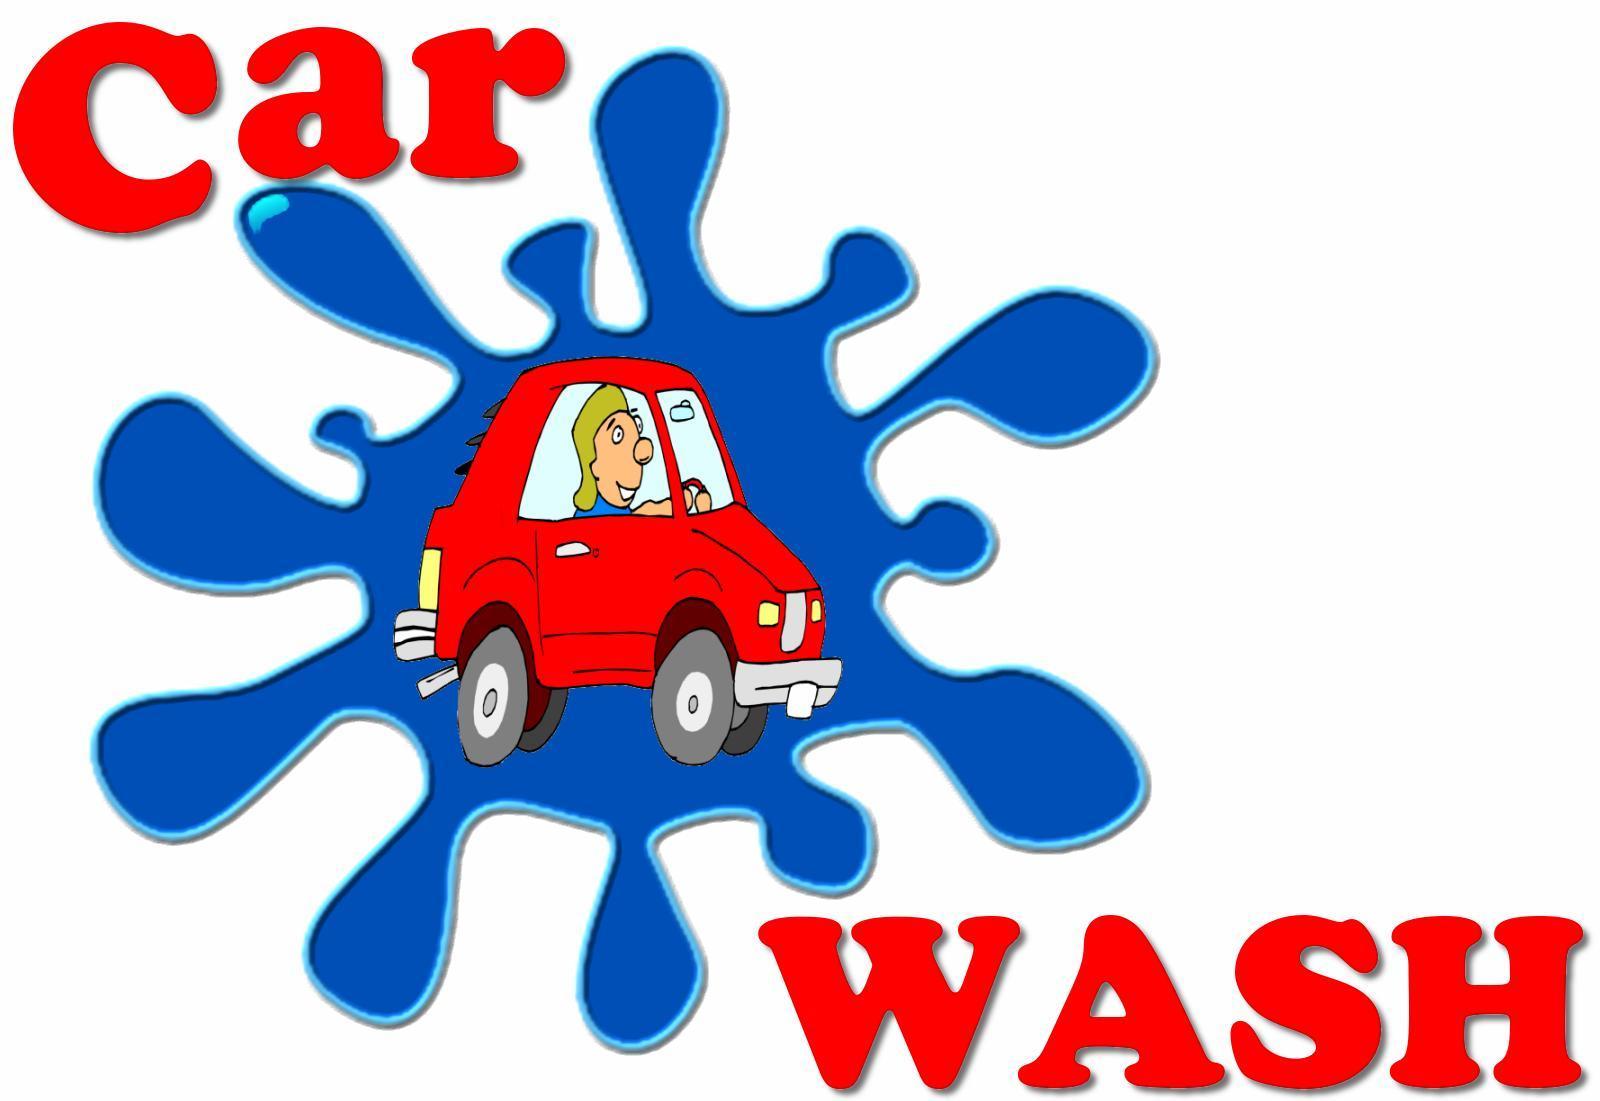 Free Car Wash Cartoon Images, Download Free Car Wash Cartoon Images png  images, Free ClipArts on Clipart Library